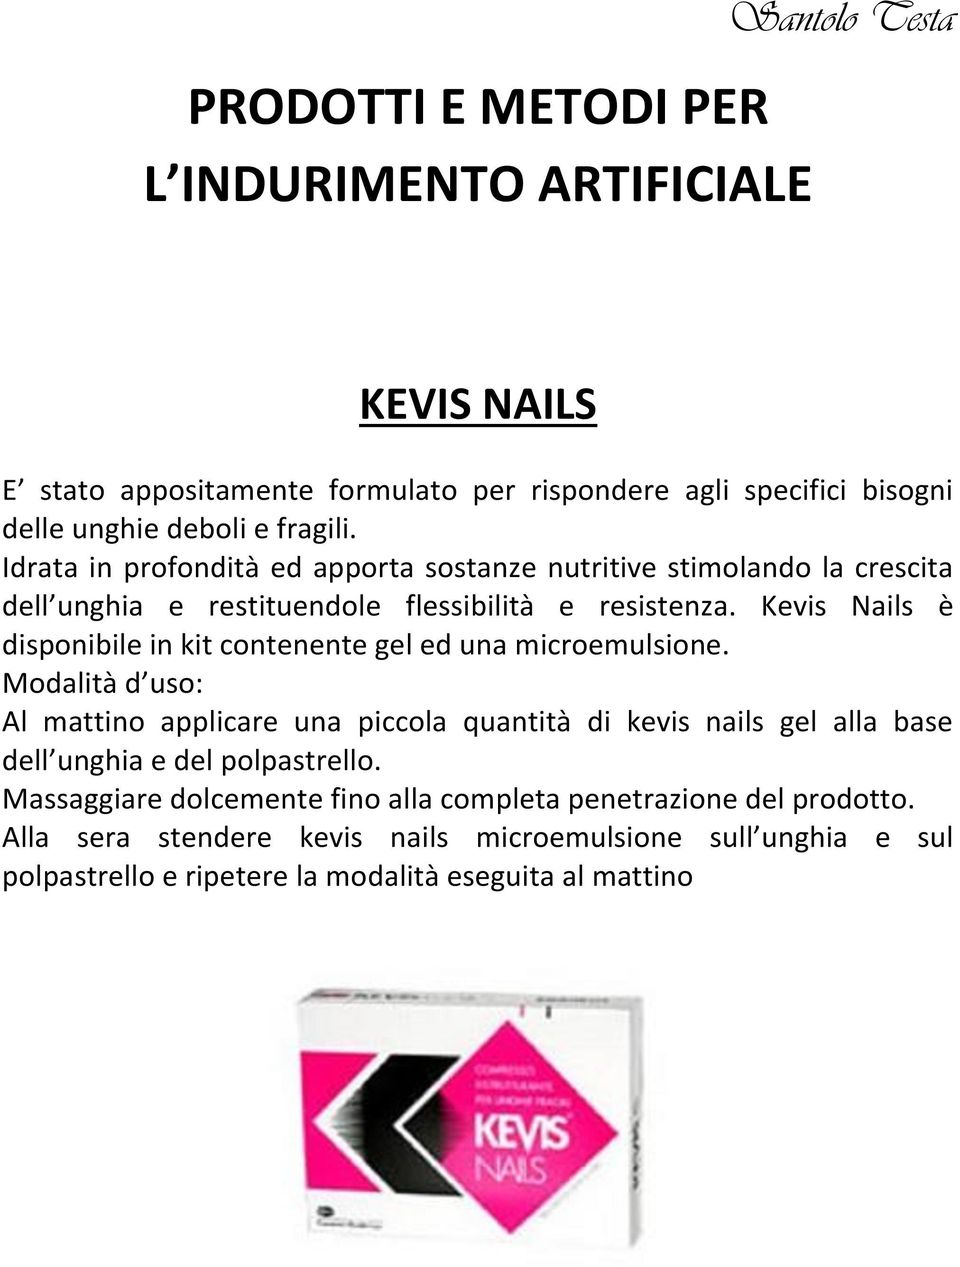 Kevis Nails è disponibile in kit contenente gel ed una microemulsione.